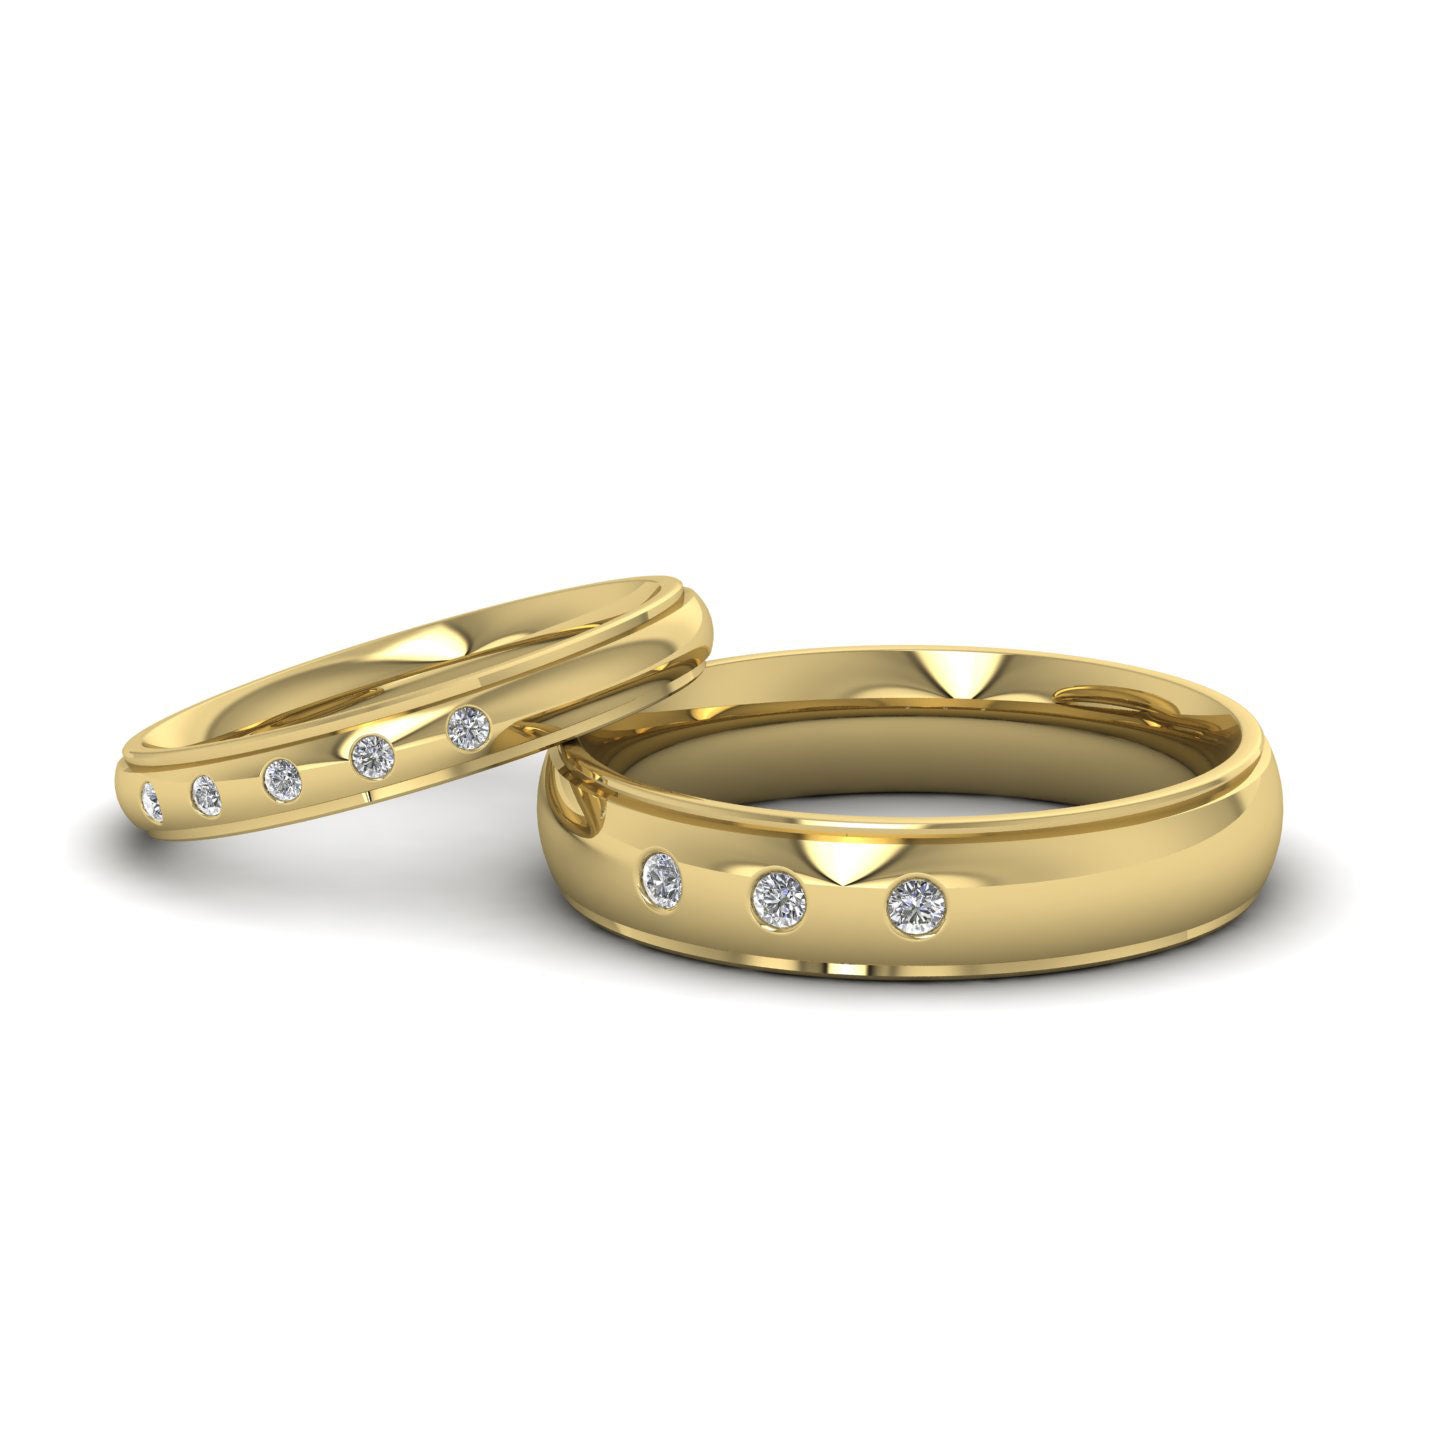 Line Pattern And Five Diamond Set 14ct Yellow Gold 3mm Wedding Ring